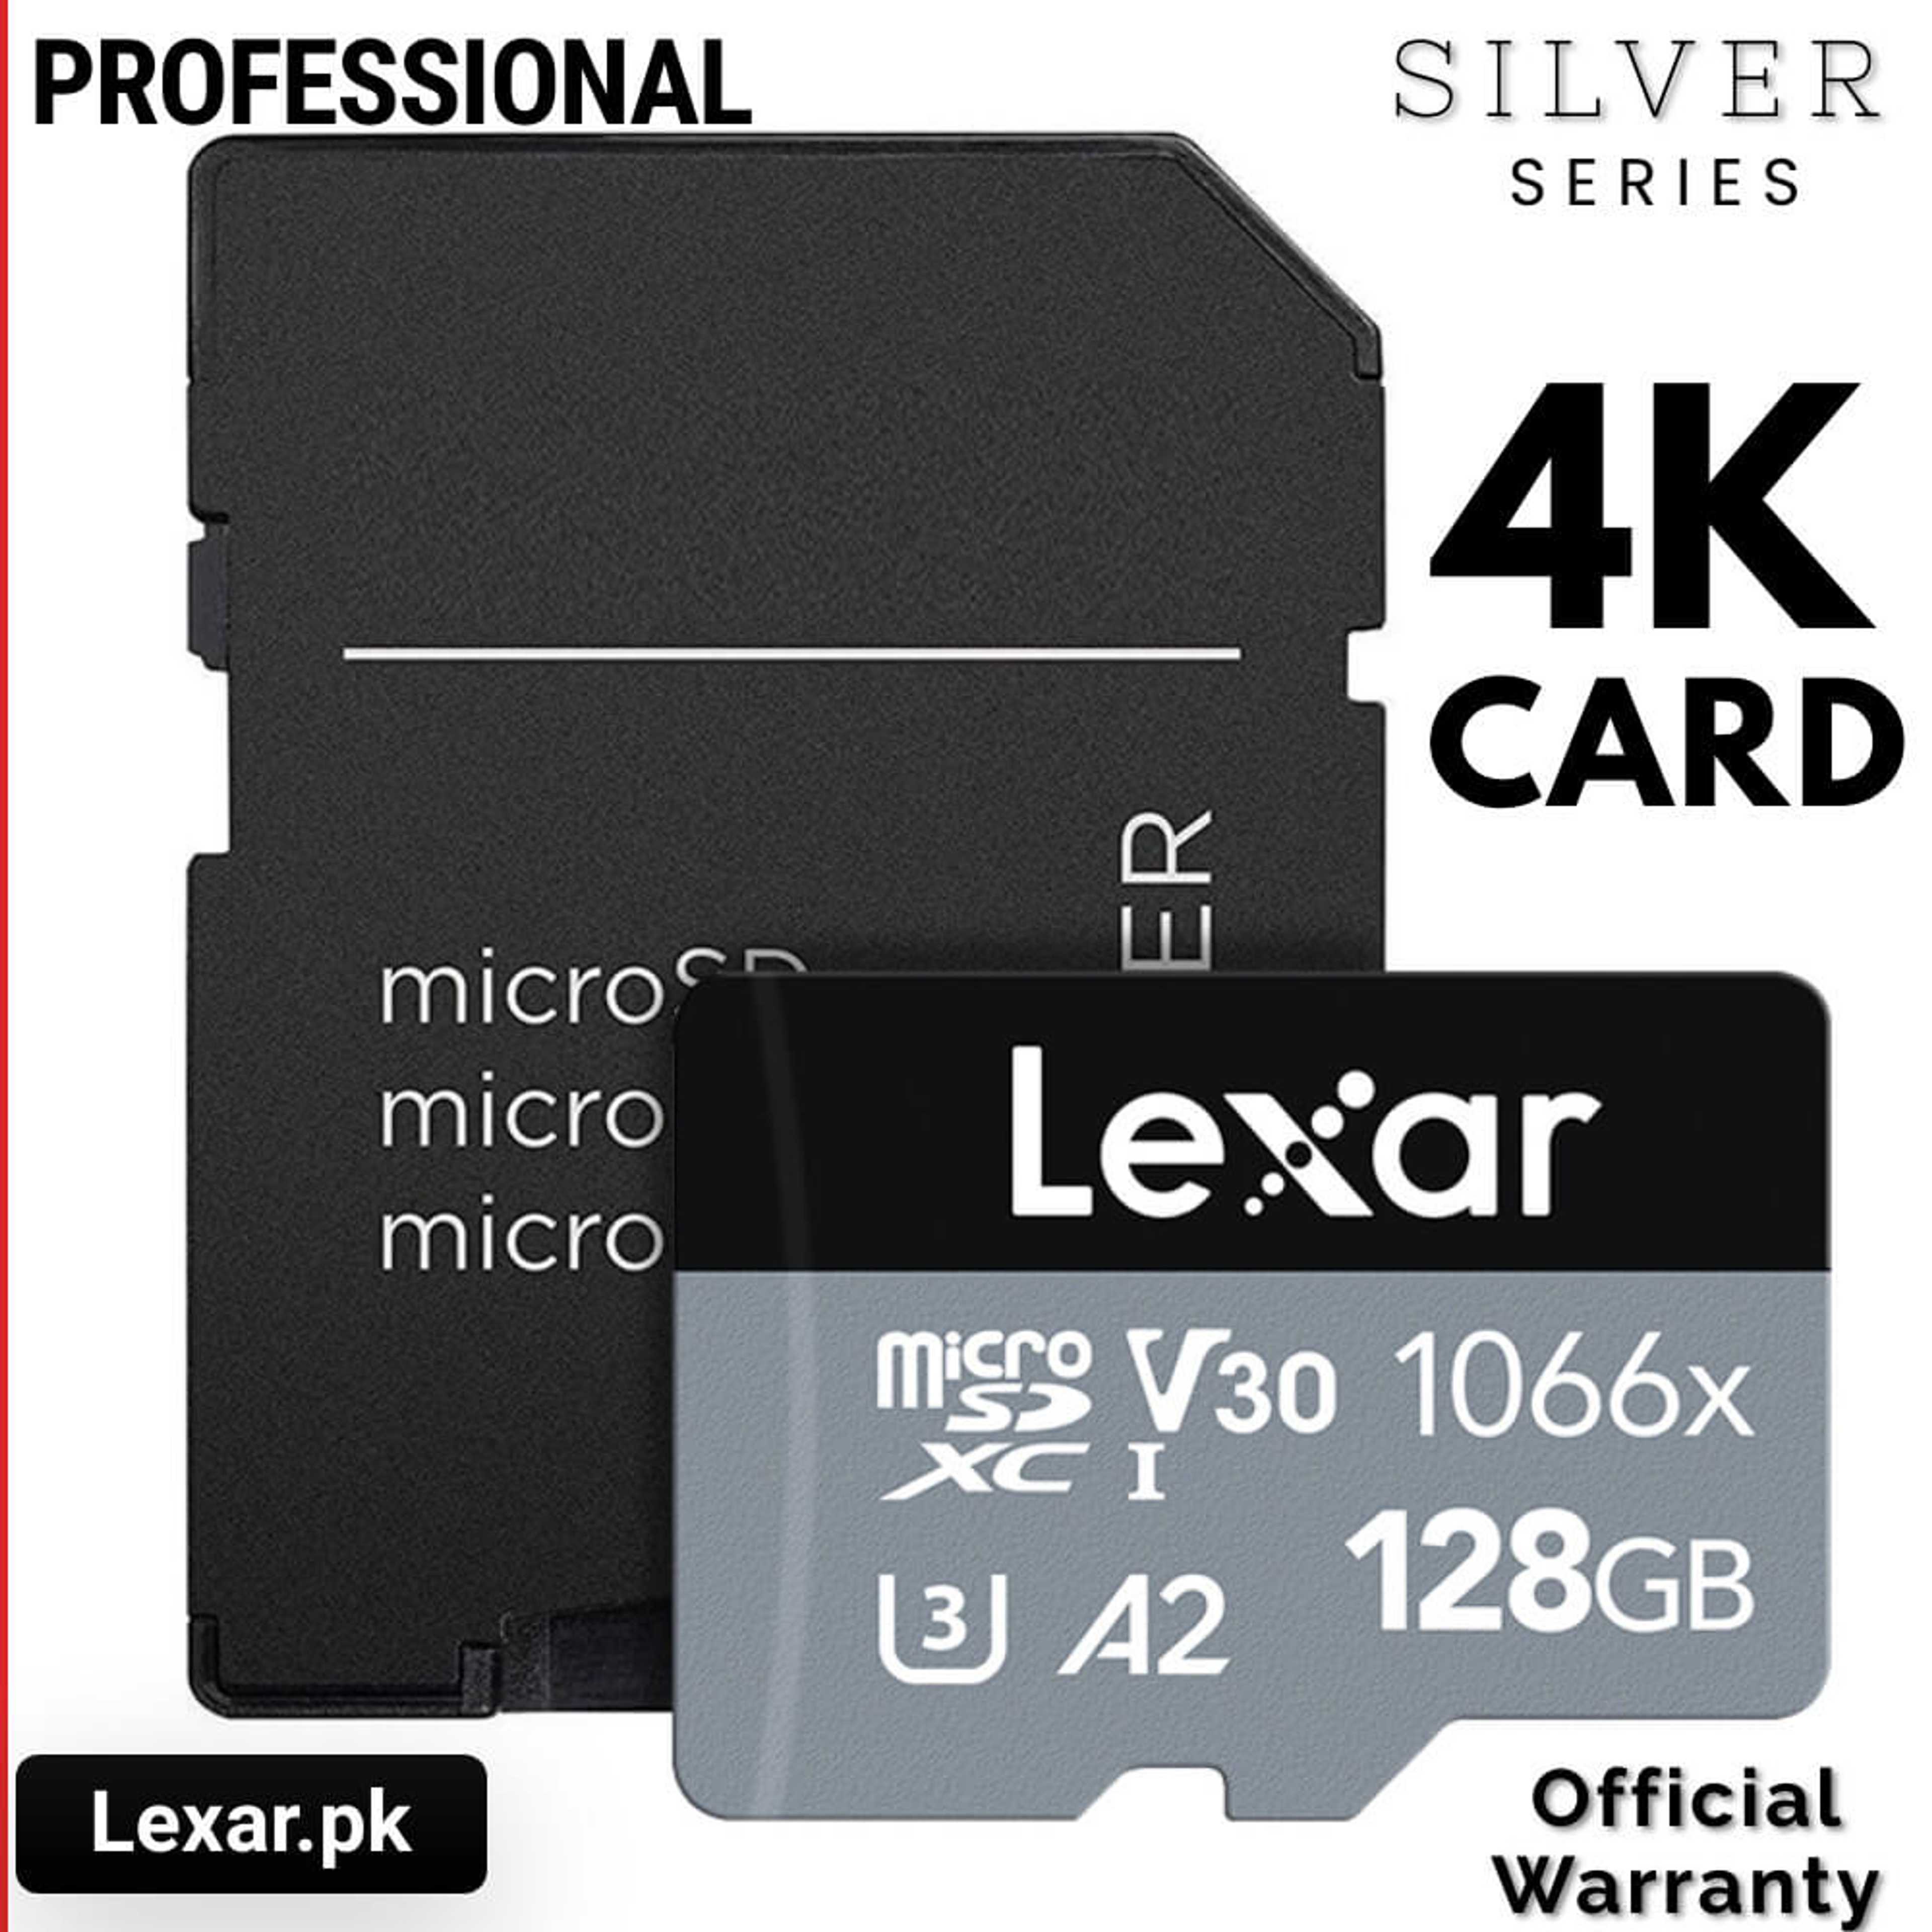 128GB Lexar Professional 1066x microSDXC UHS-I Card SILVER Series